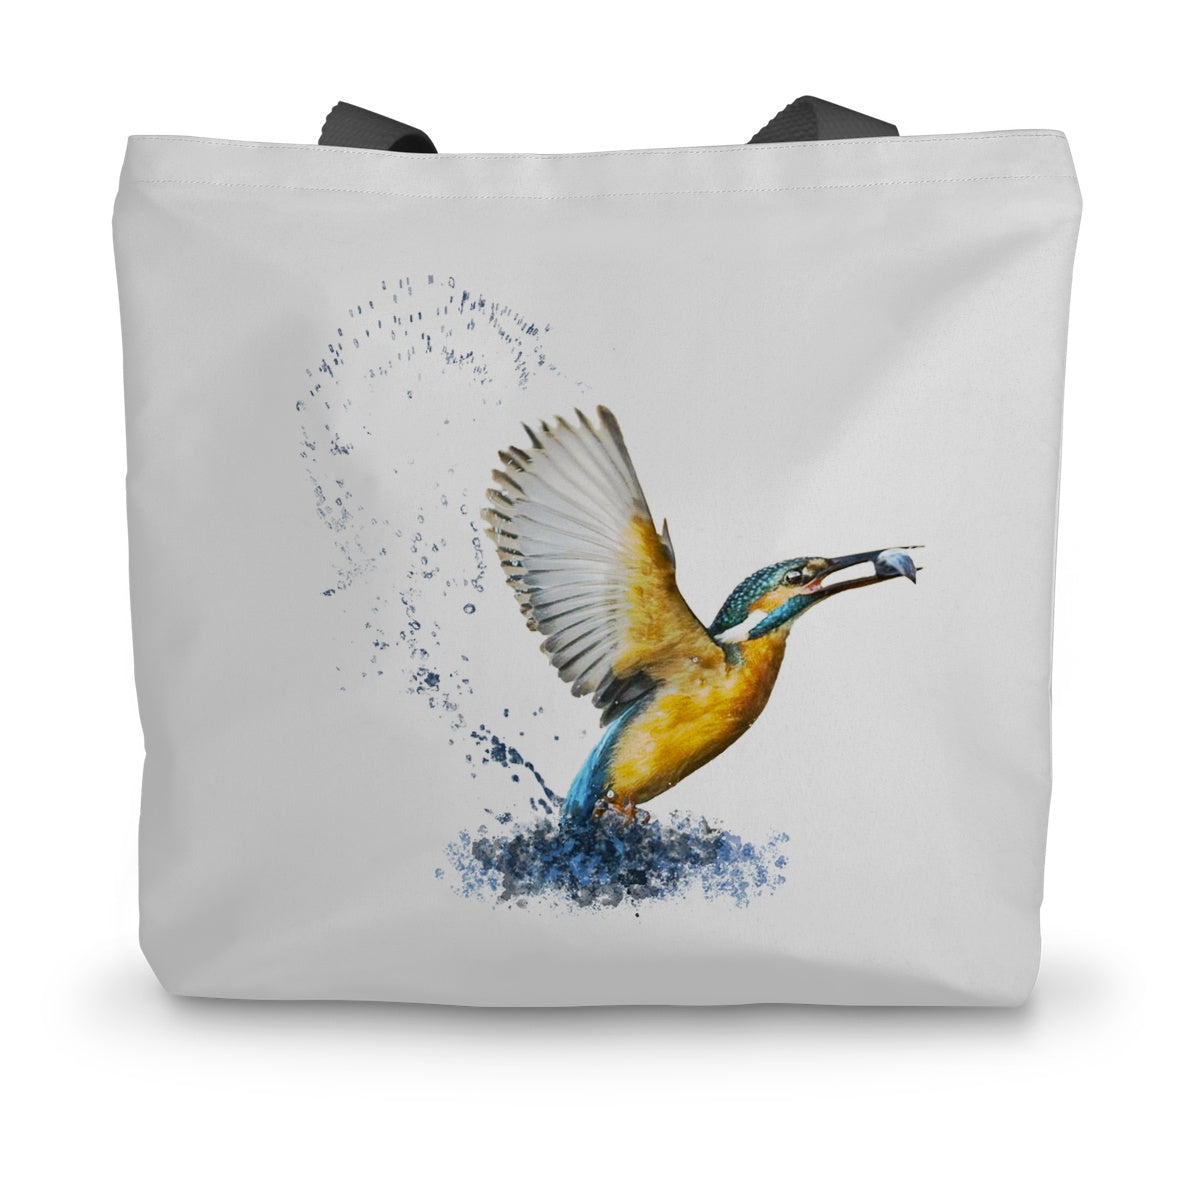 Kingfisher Canvas Tote Bag